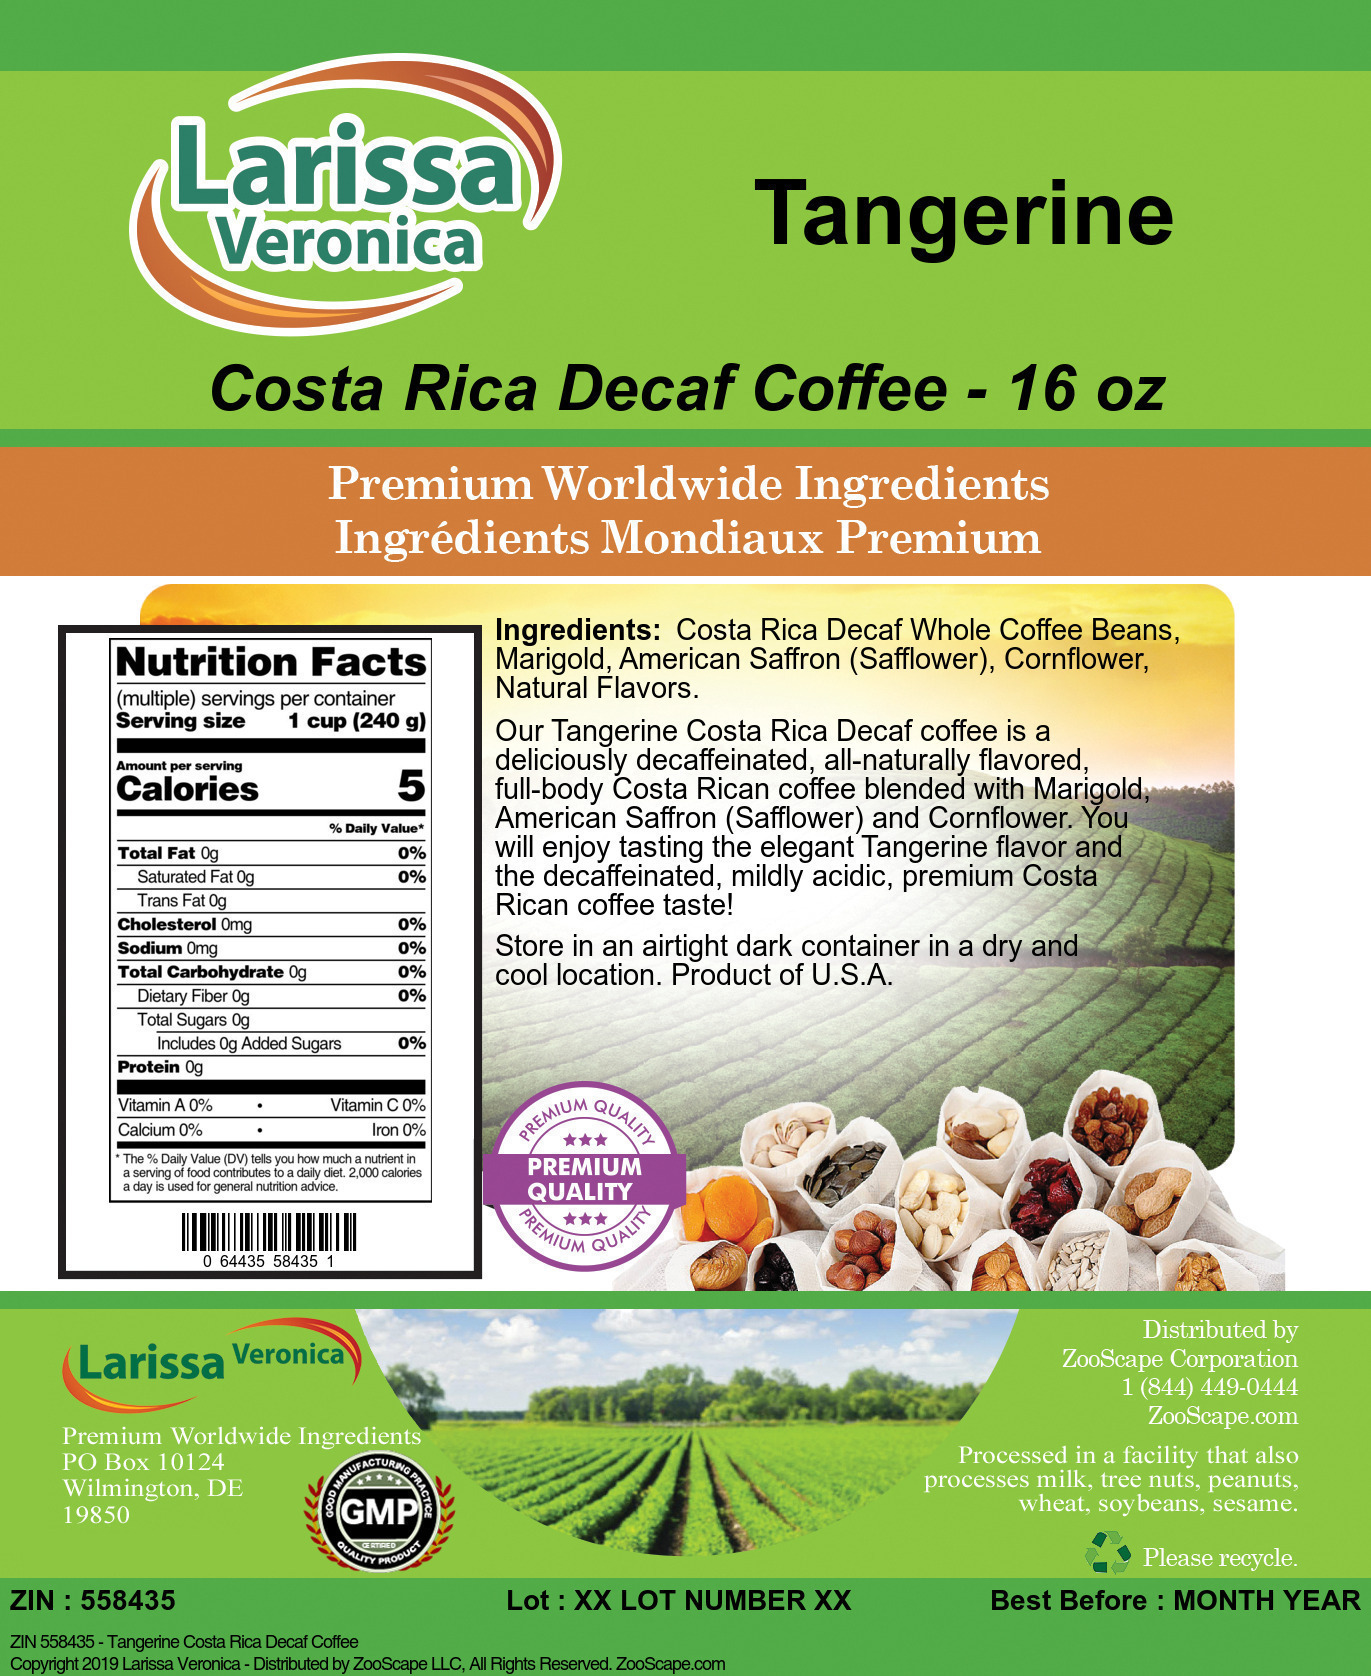 Tangerine Costa Rica Decaf Coffee - Label